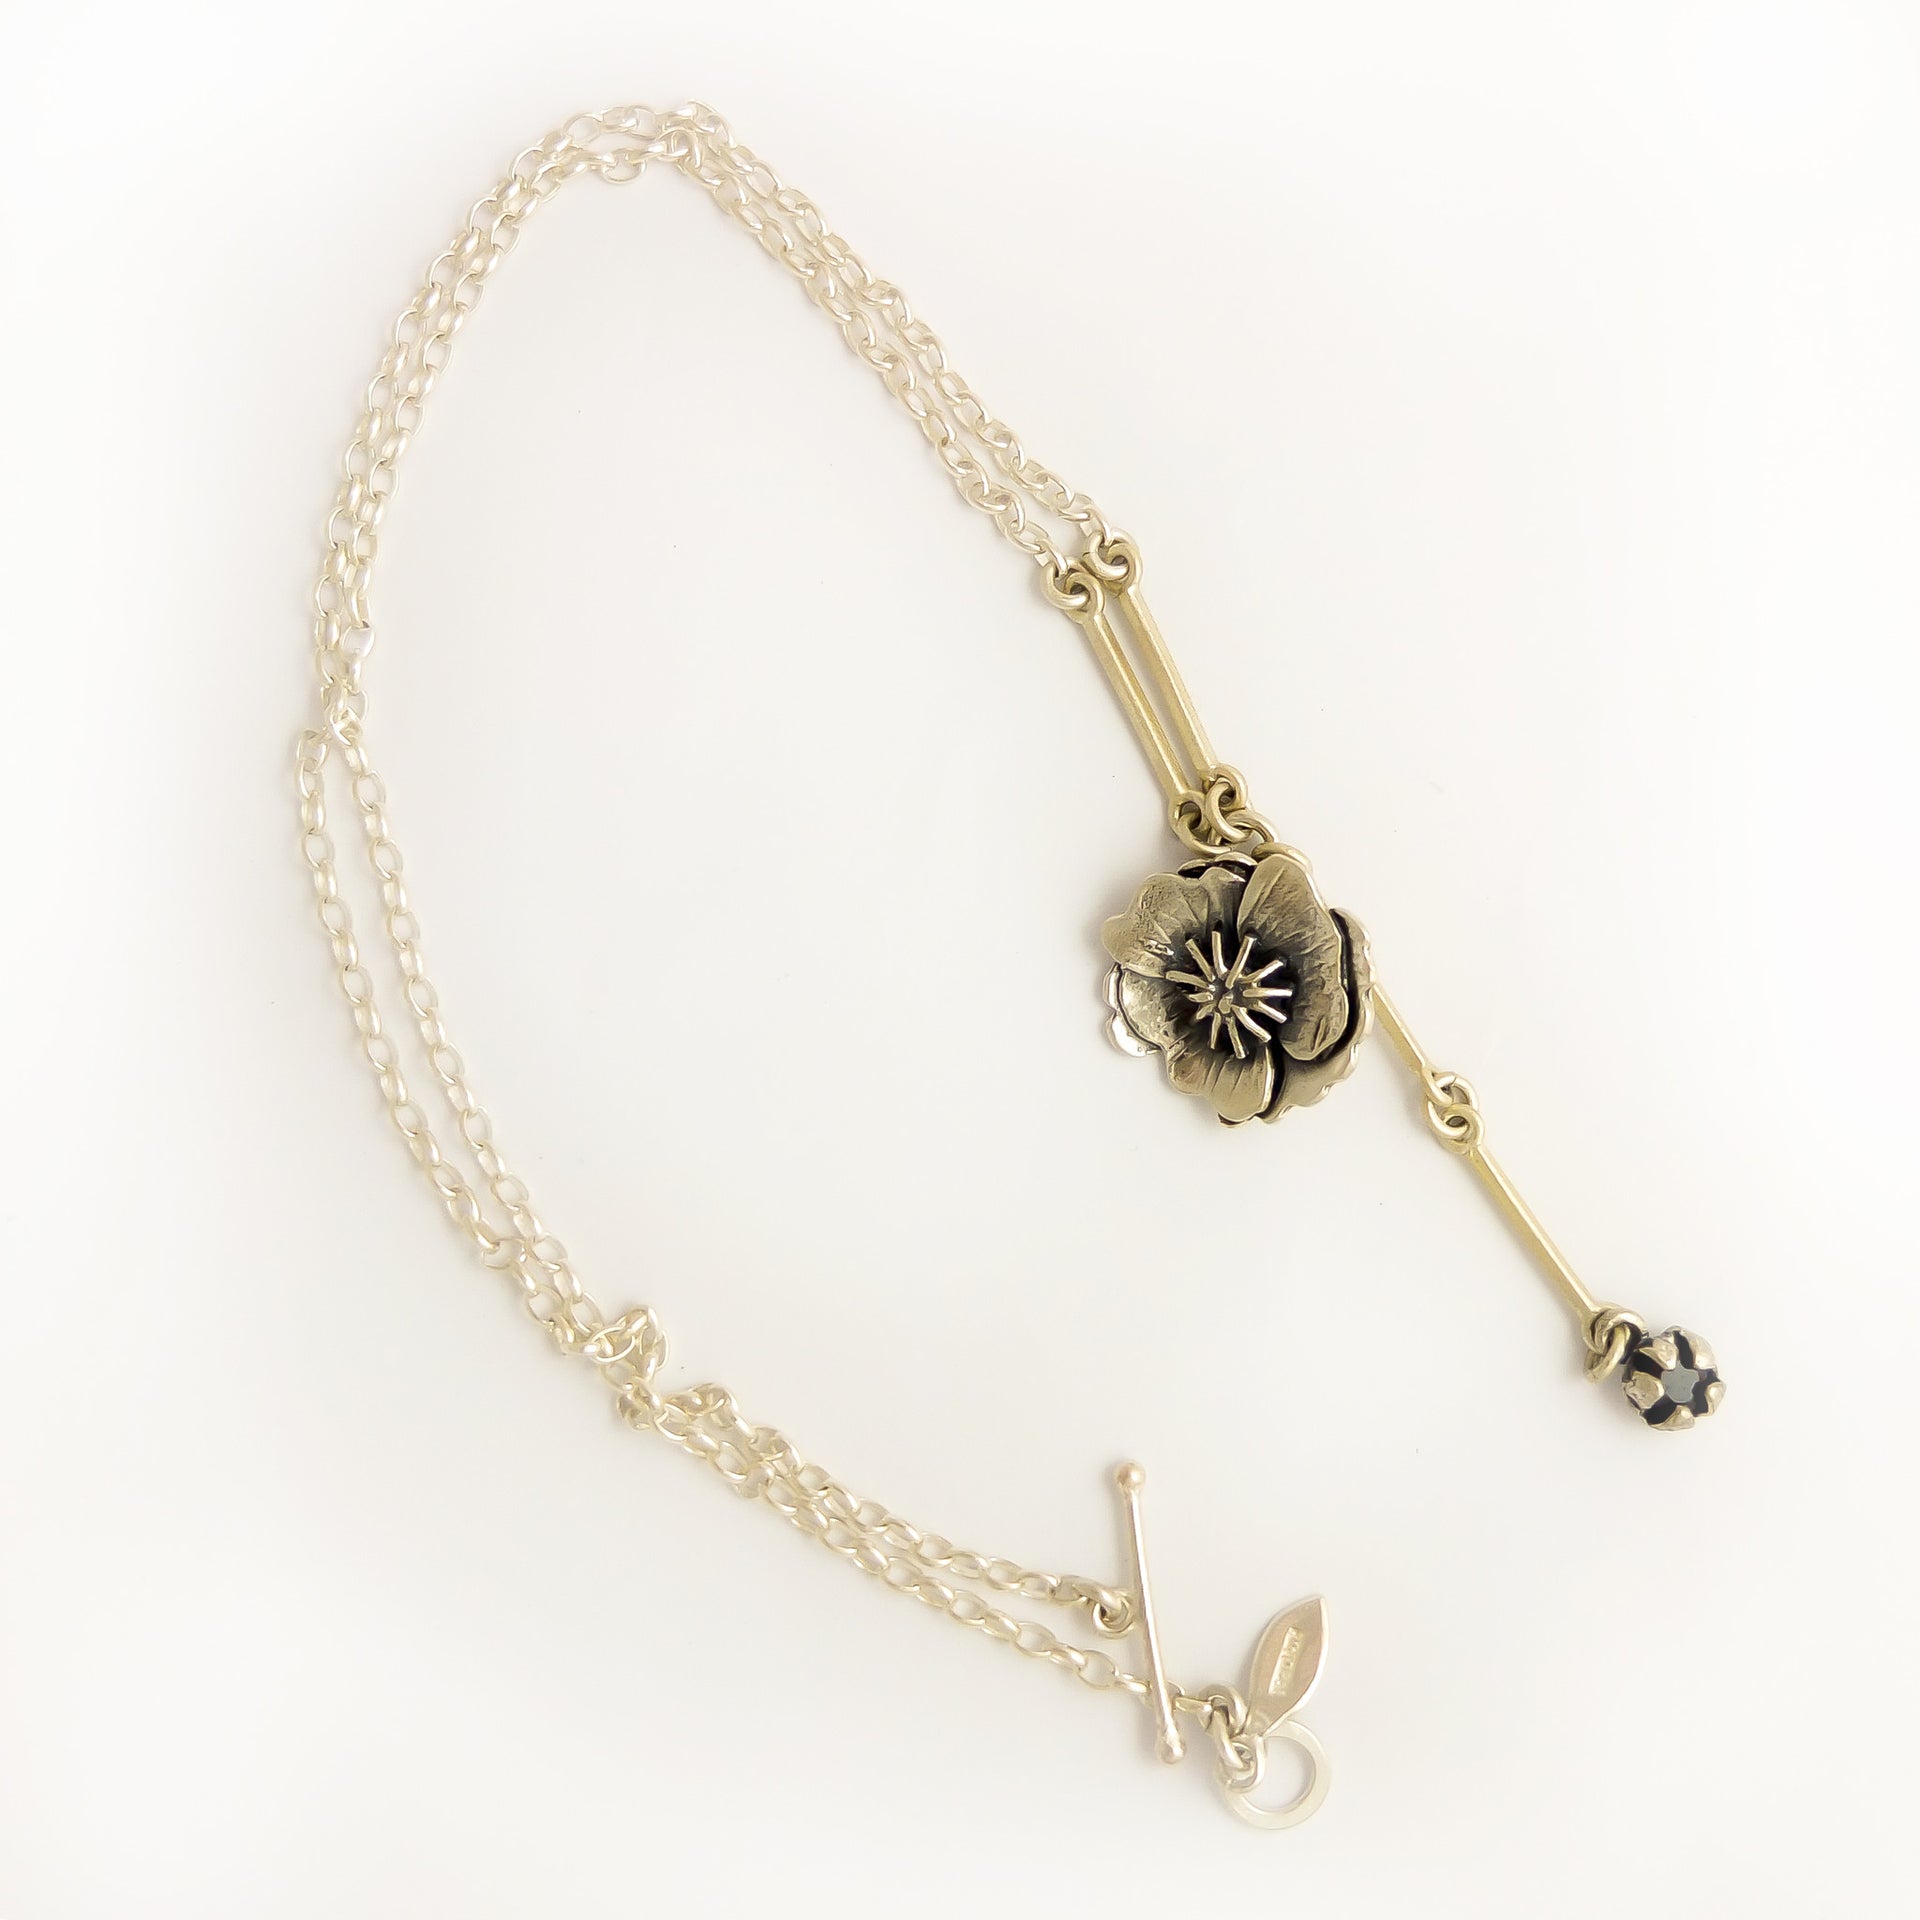 Poppy Flower with Trail Necklace | nz jewellery | Redmanuka, silver necklace